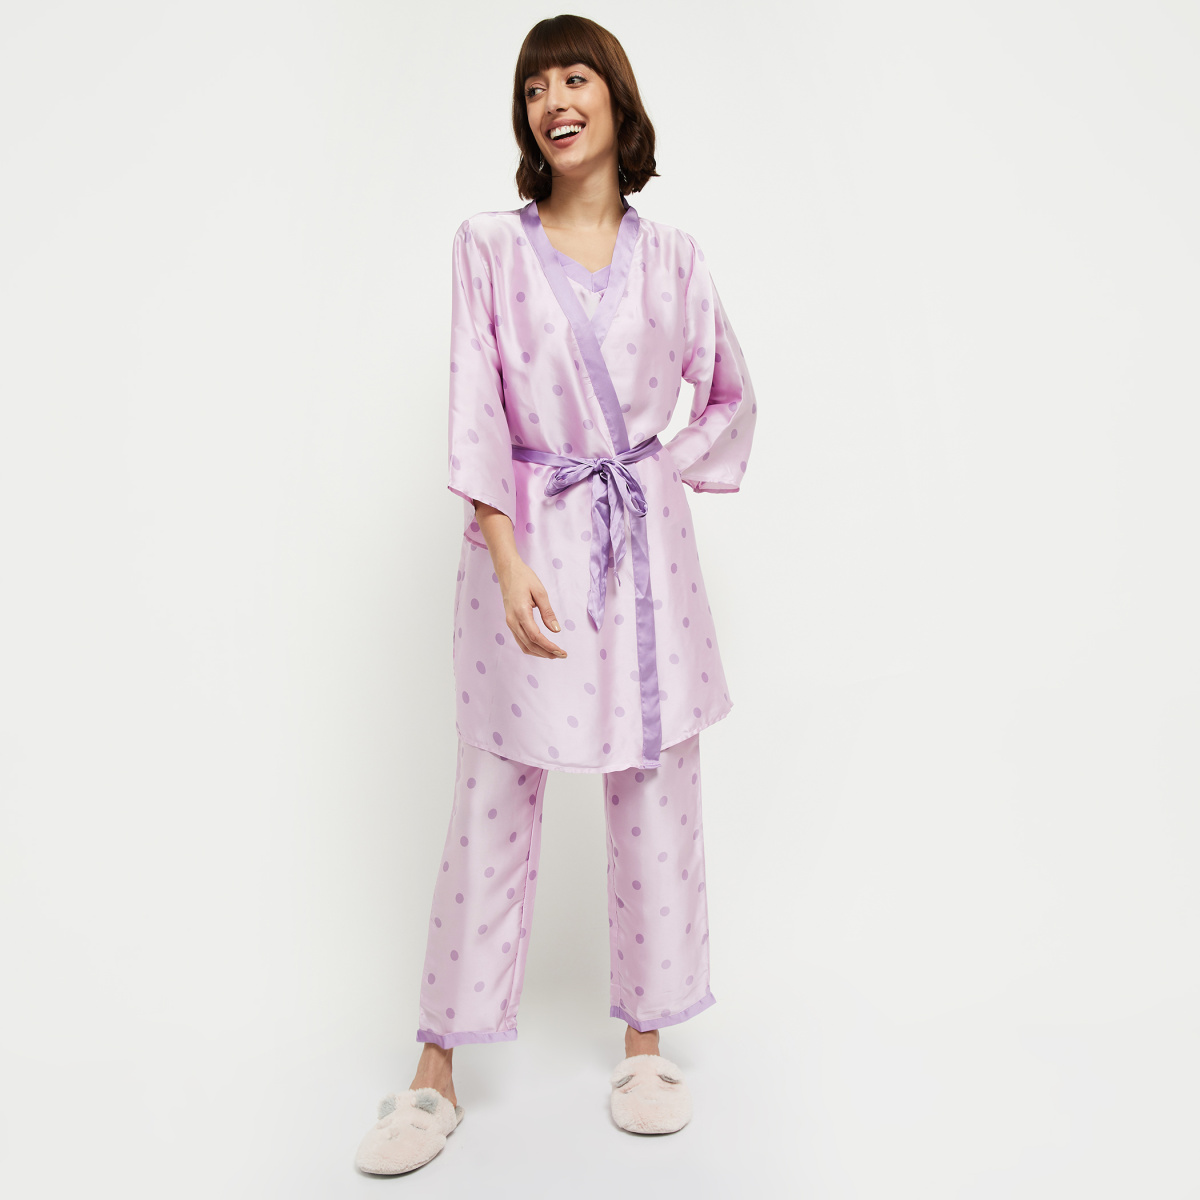 MAX Printed Lounge Top with Pyjamas and Robe